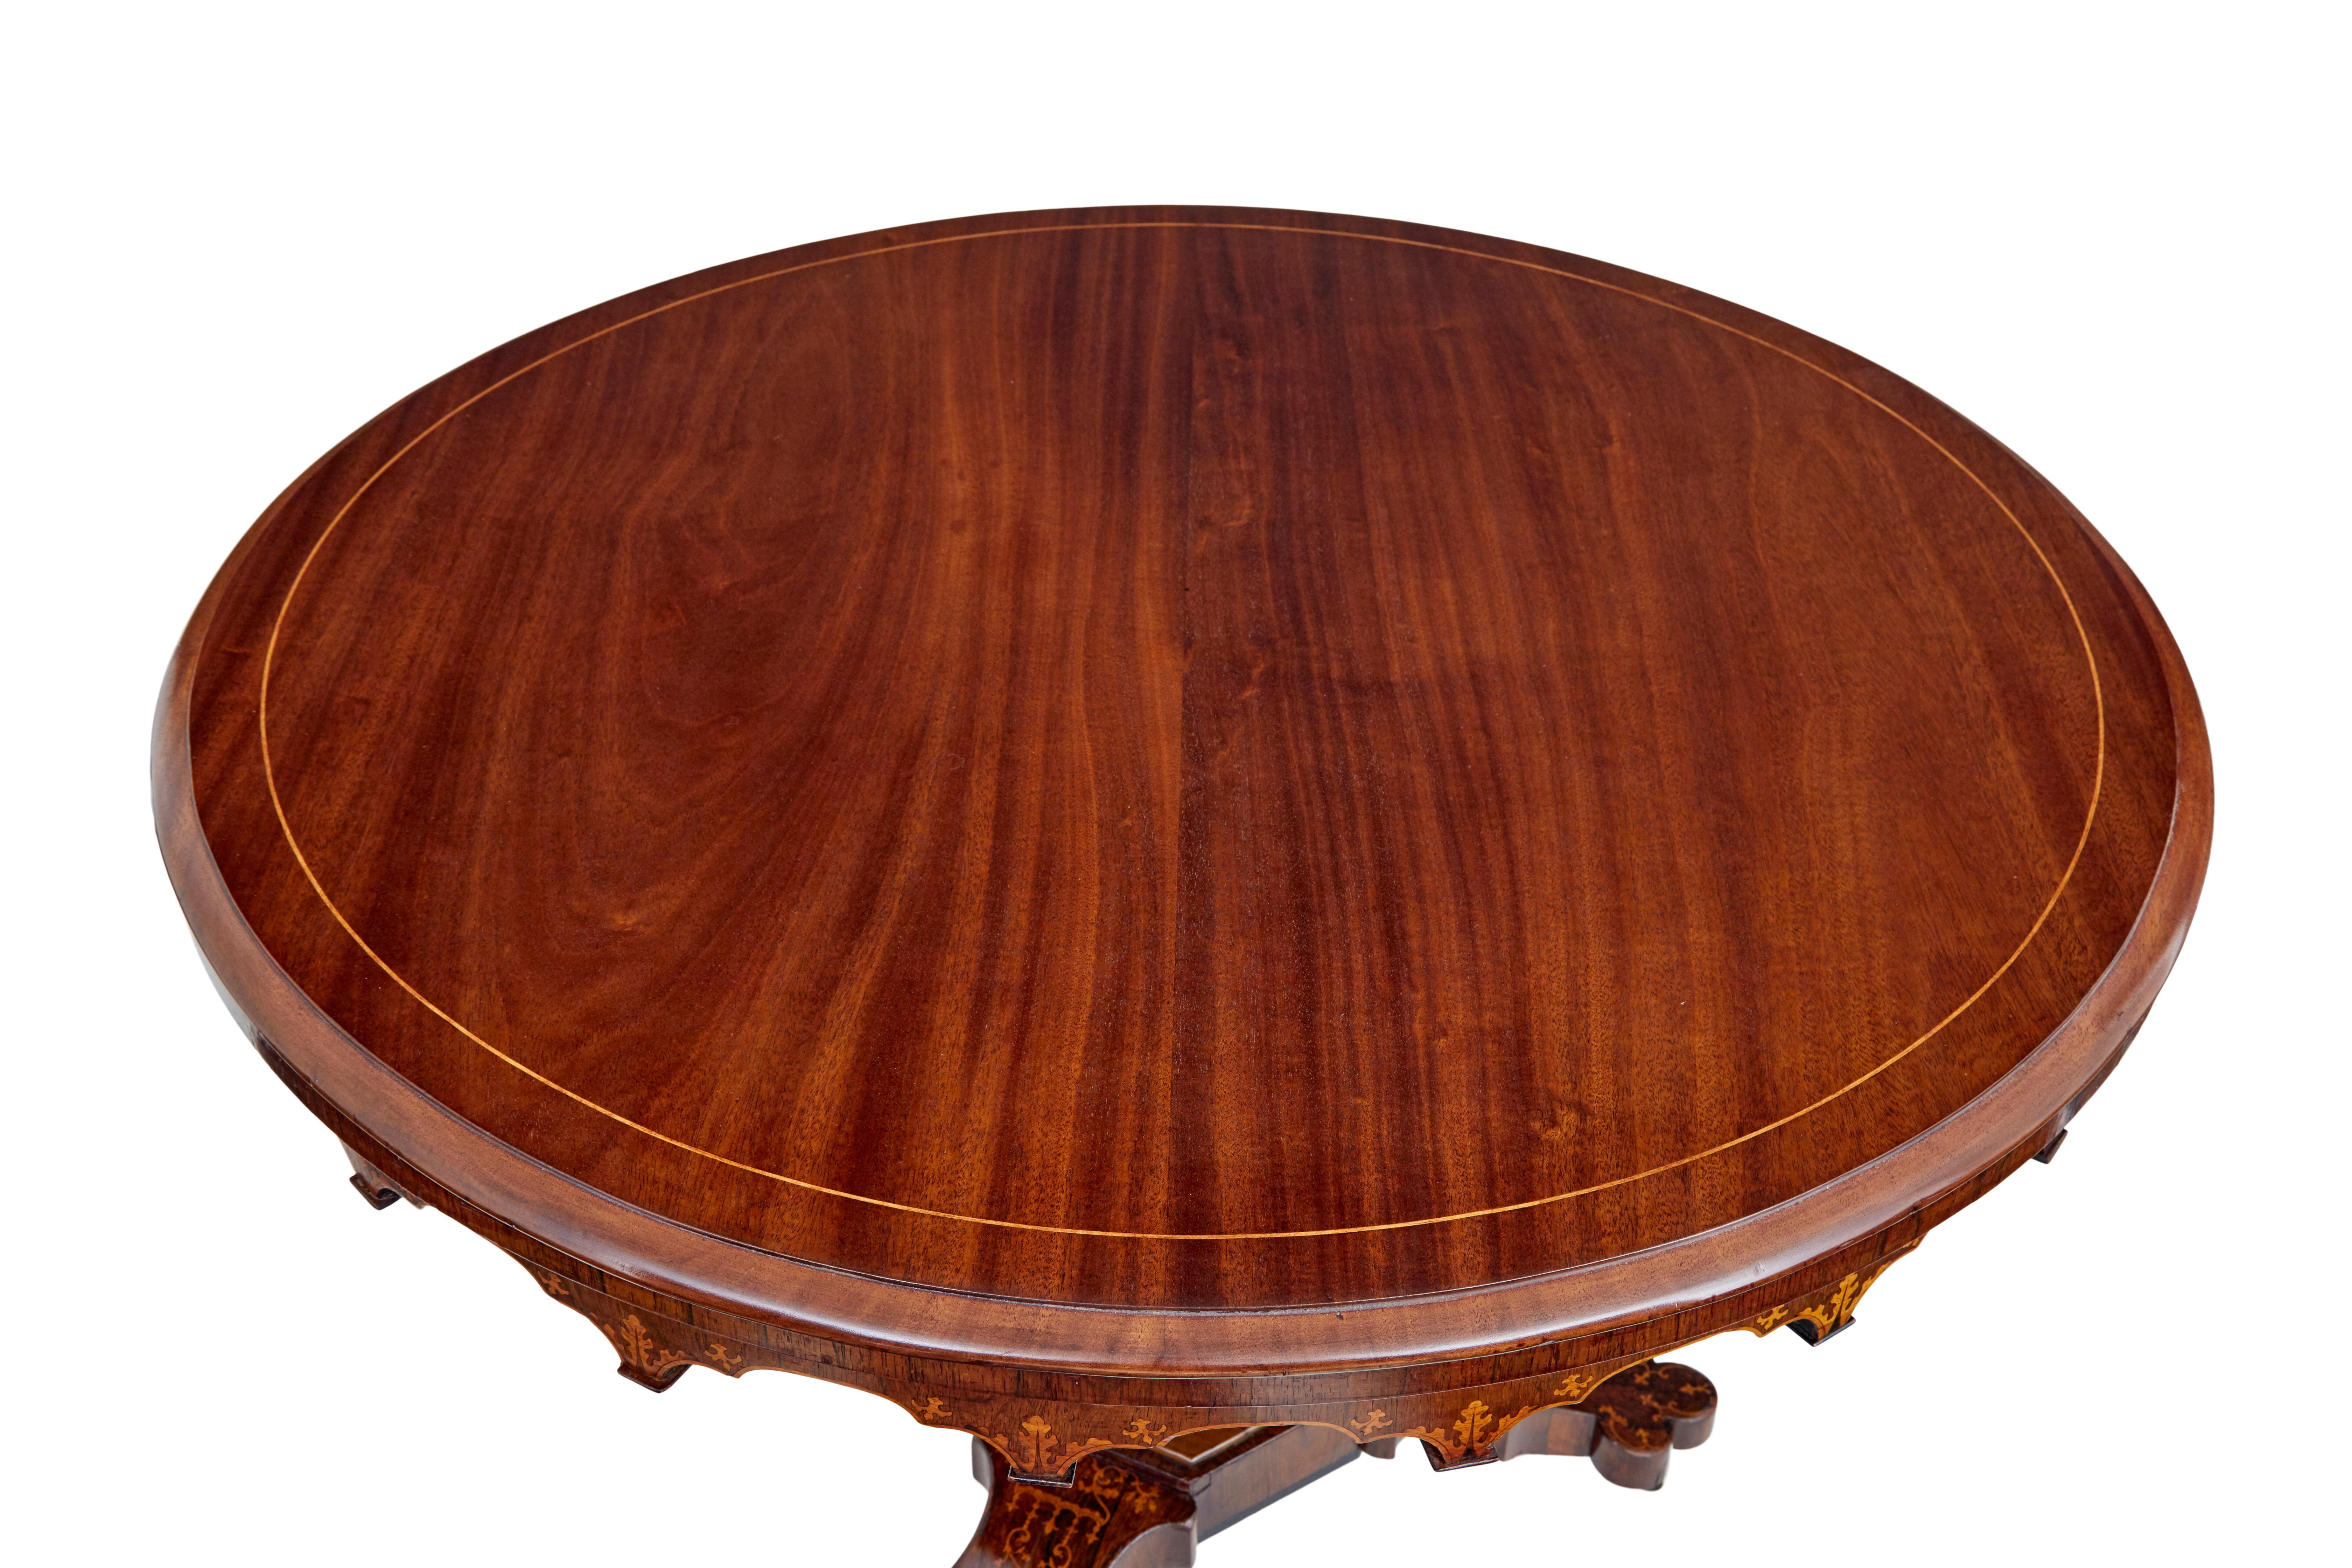 19th Century 19th century French inlaid mahogany center table